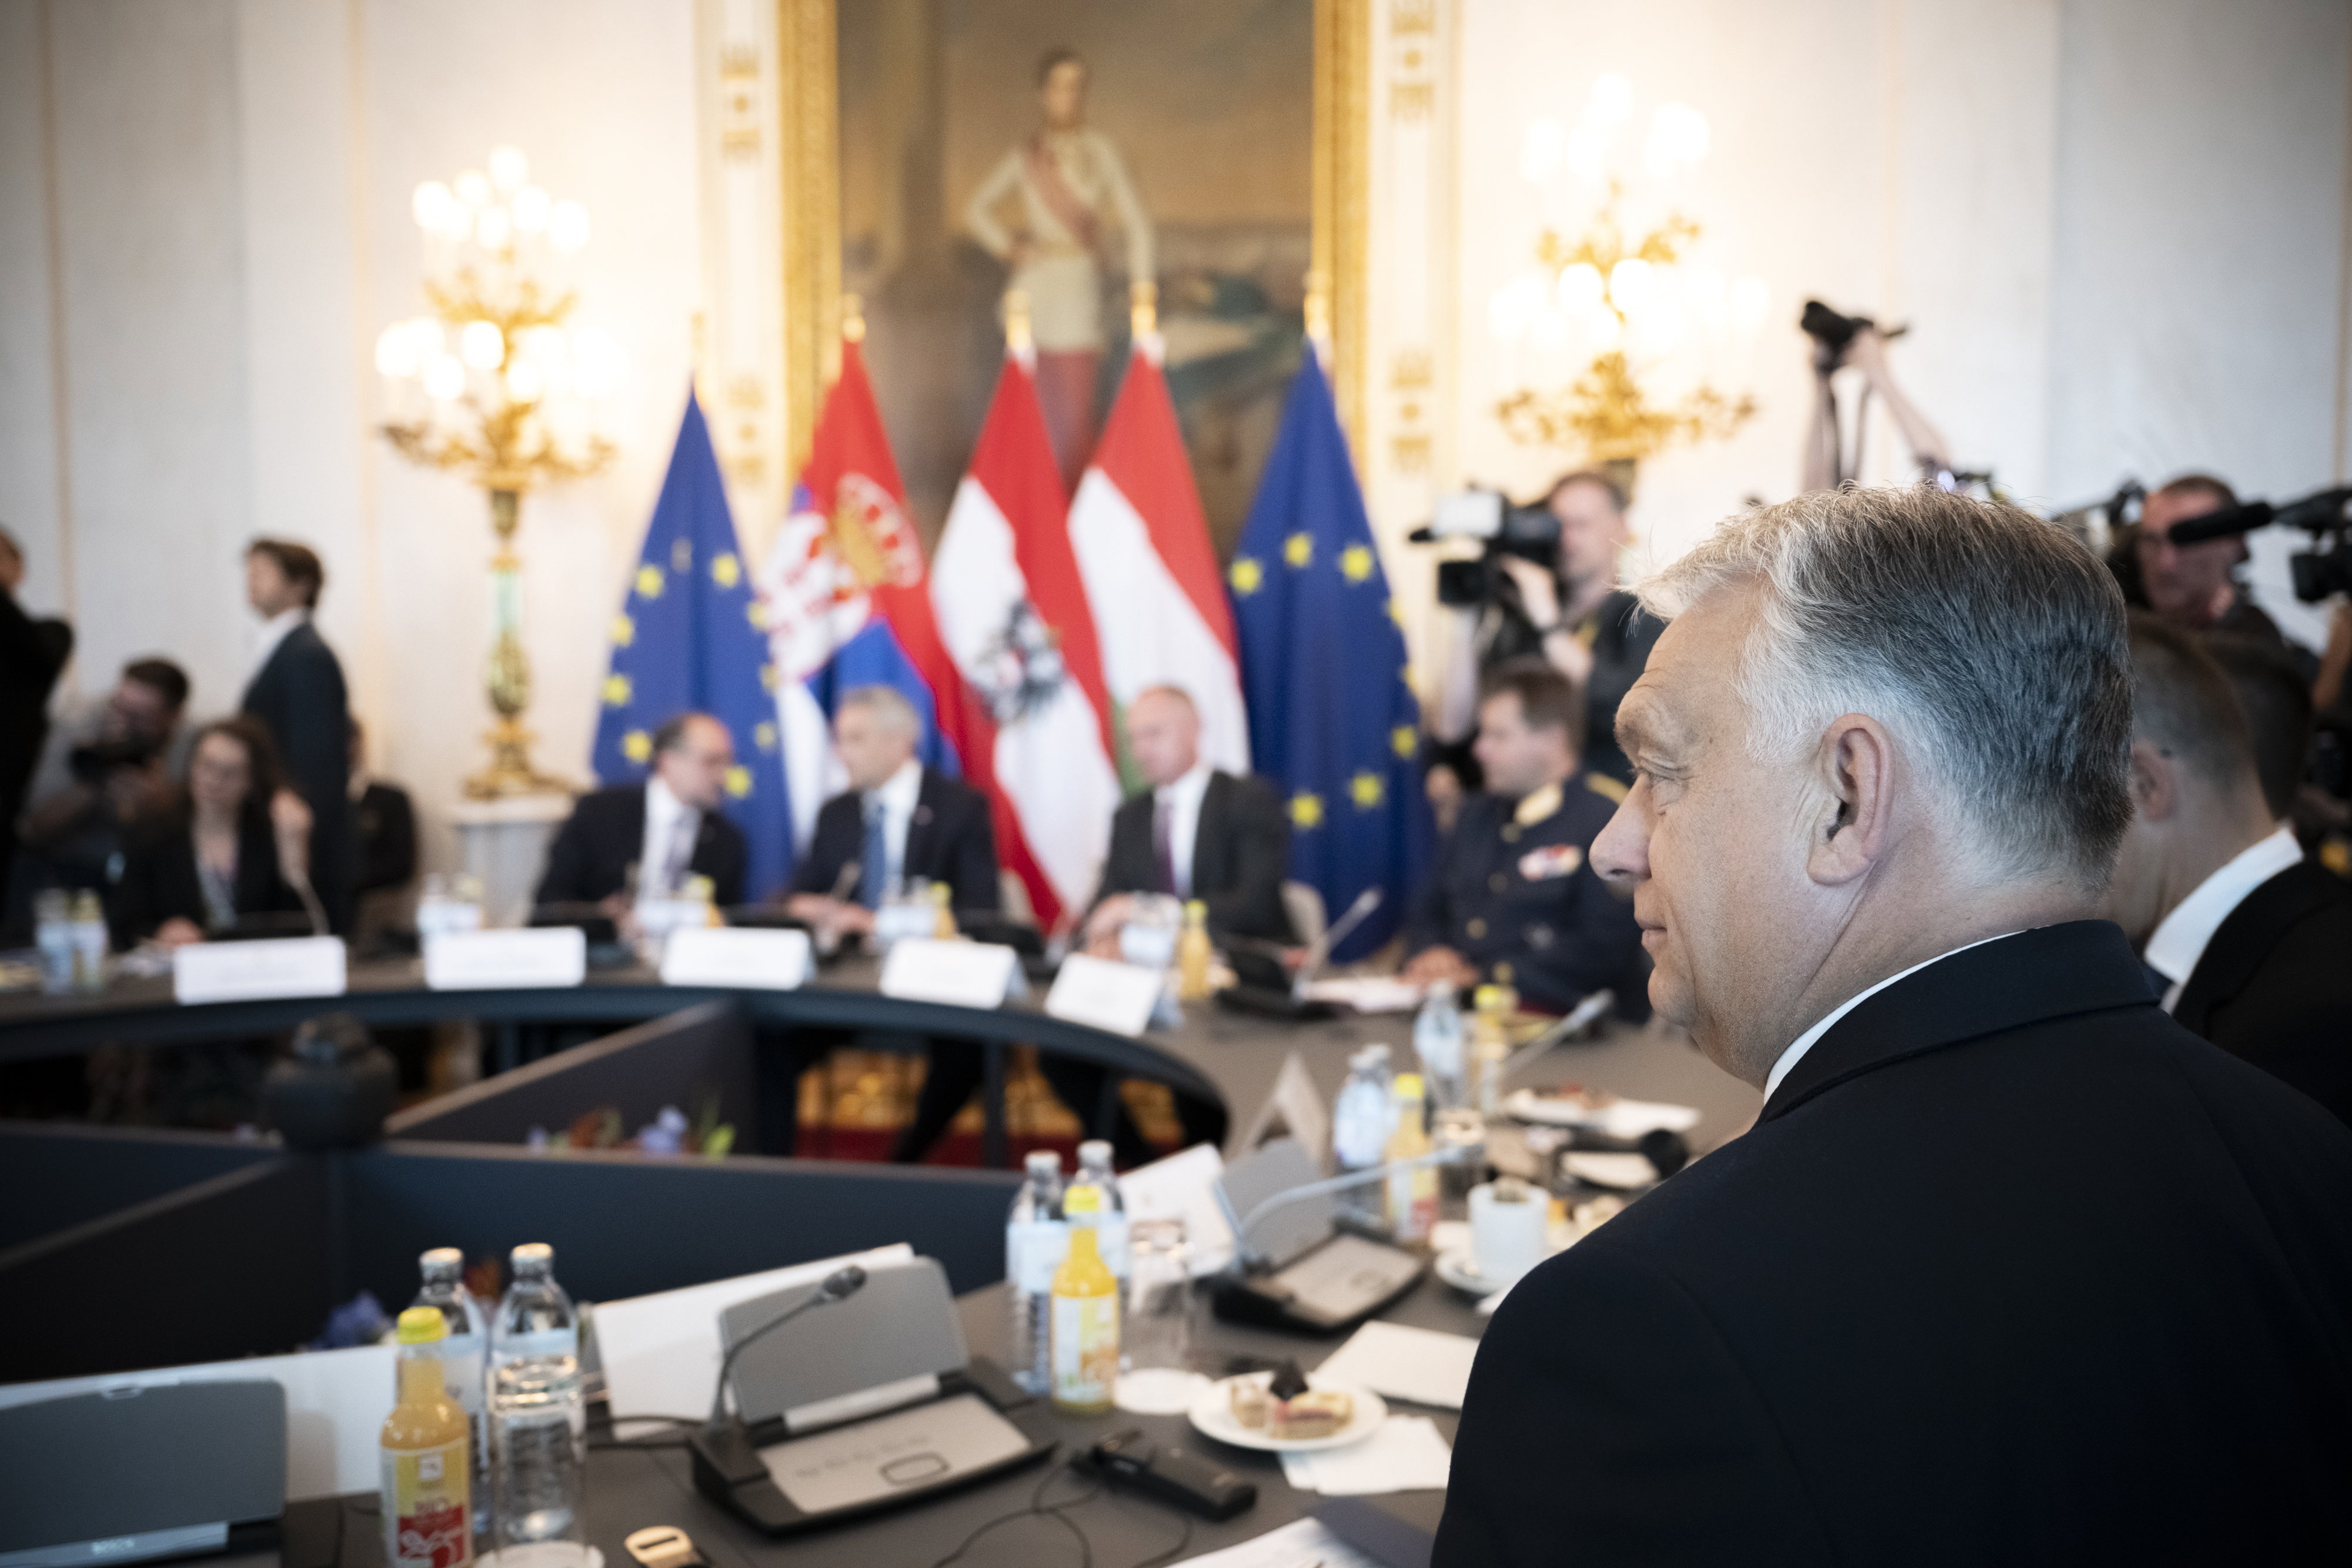 Hungary Won't Implement EU Migration Decisions - Orbán